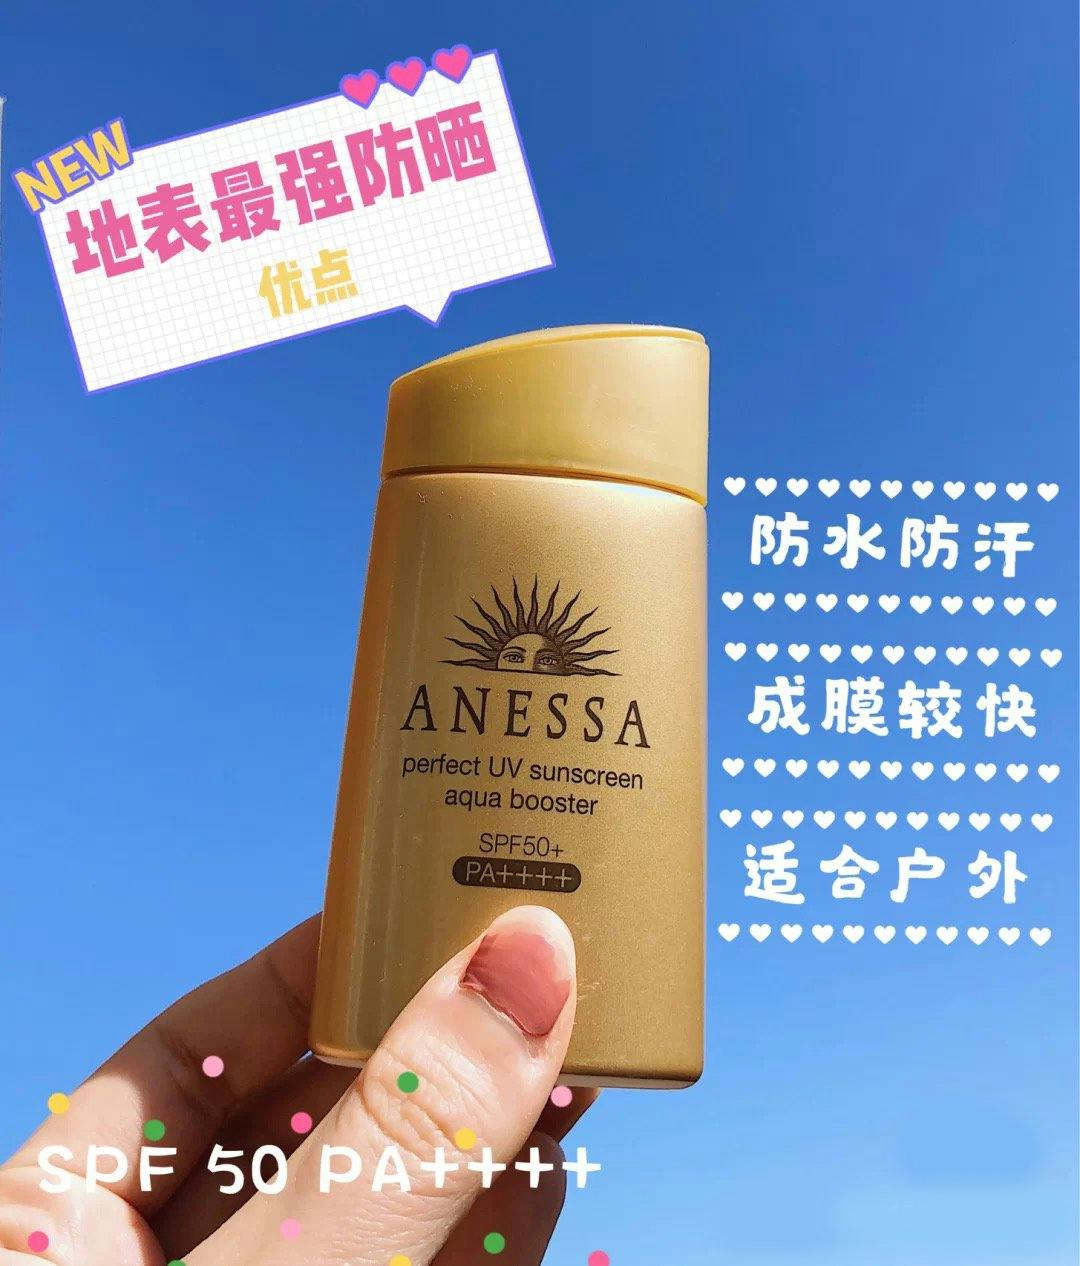 UV Sunscreen + Aqua Booster